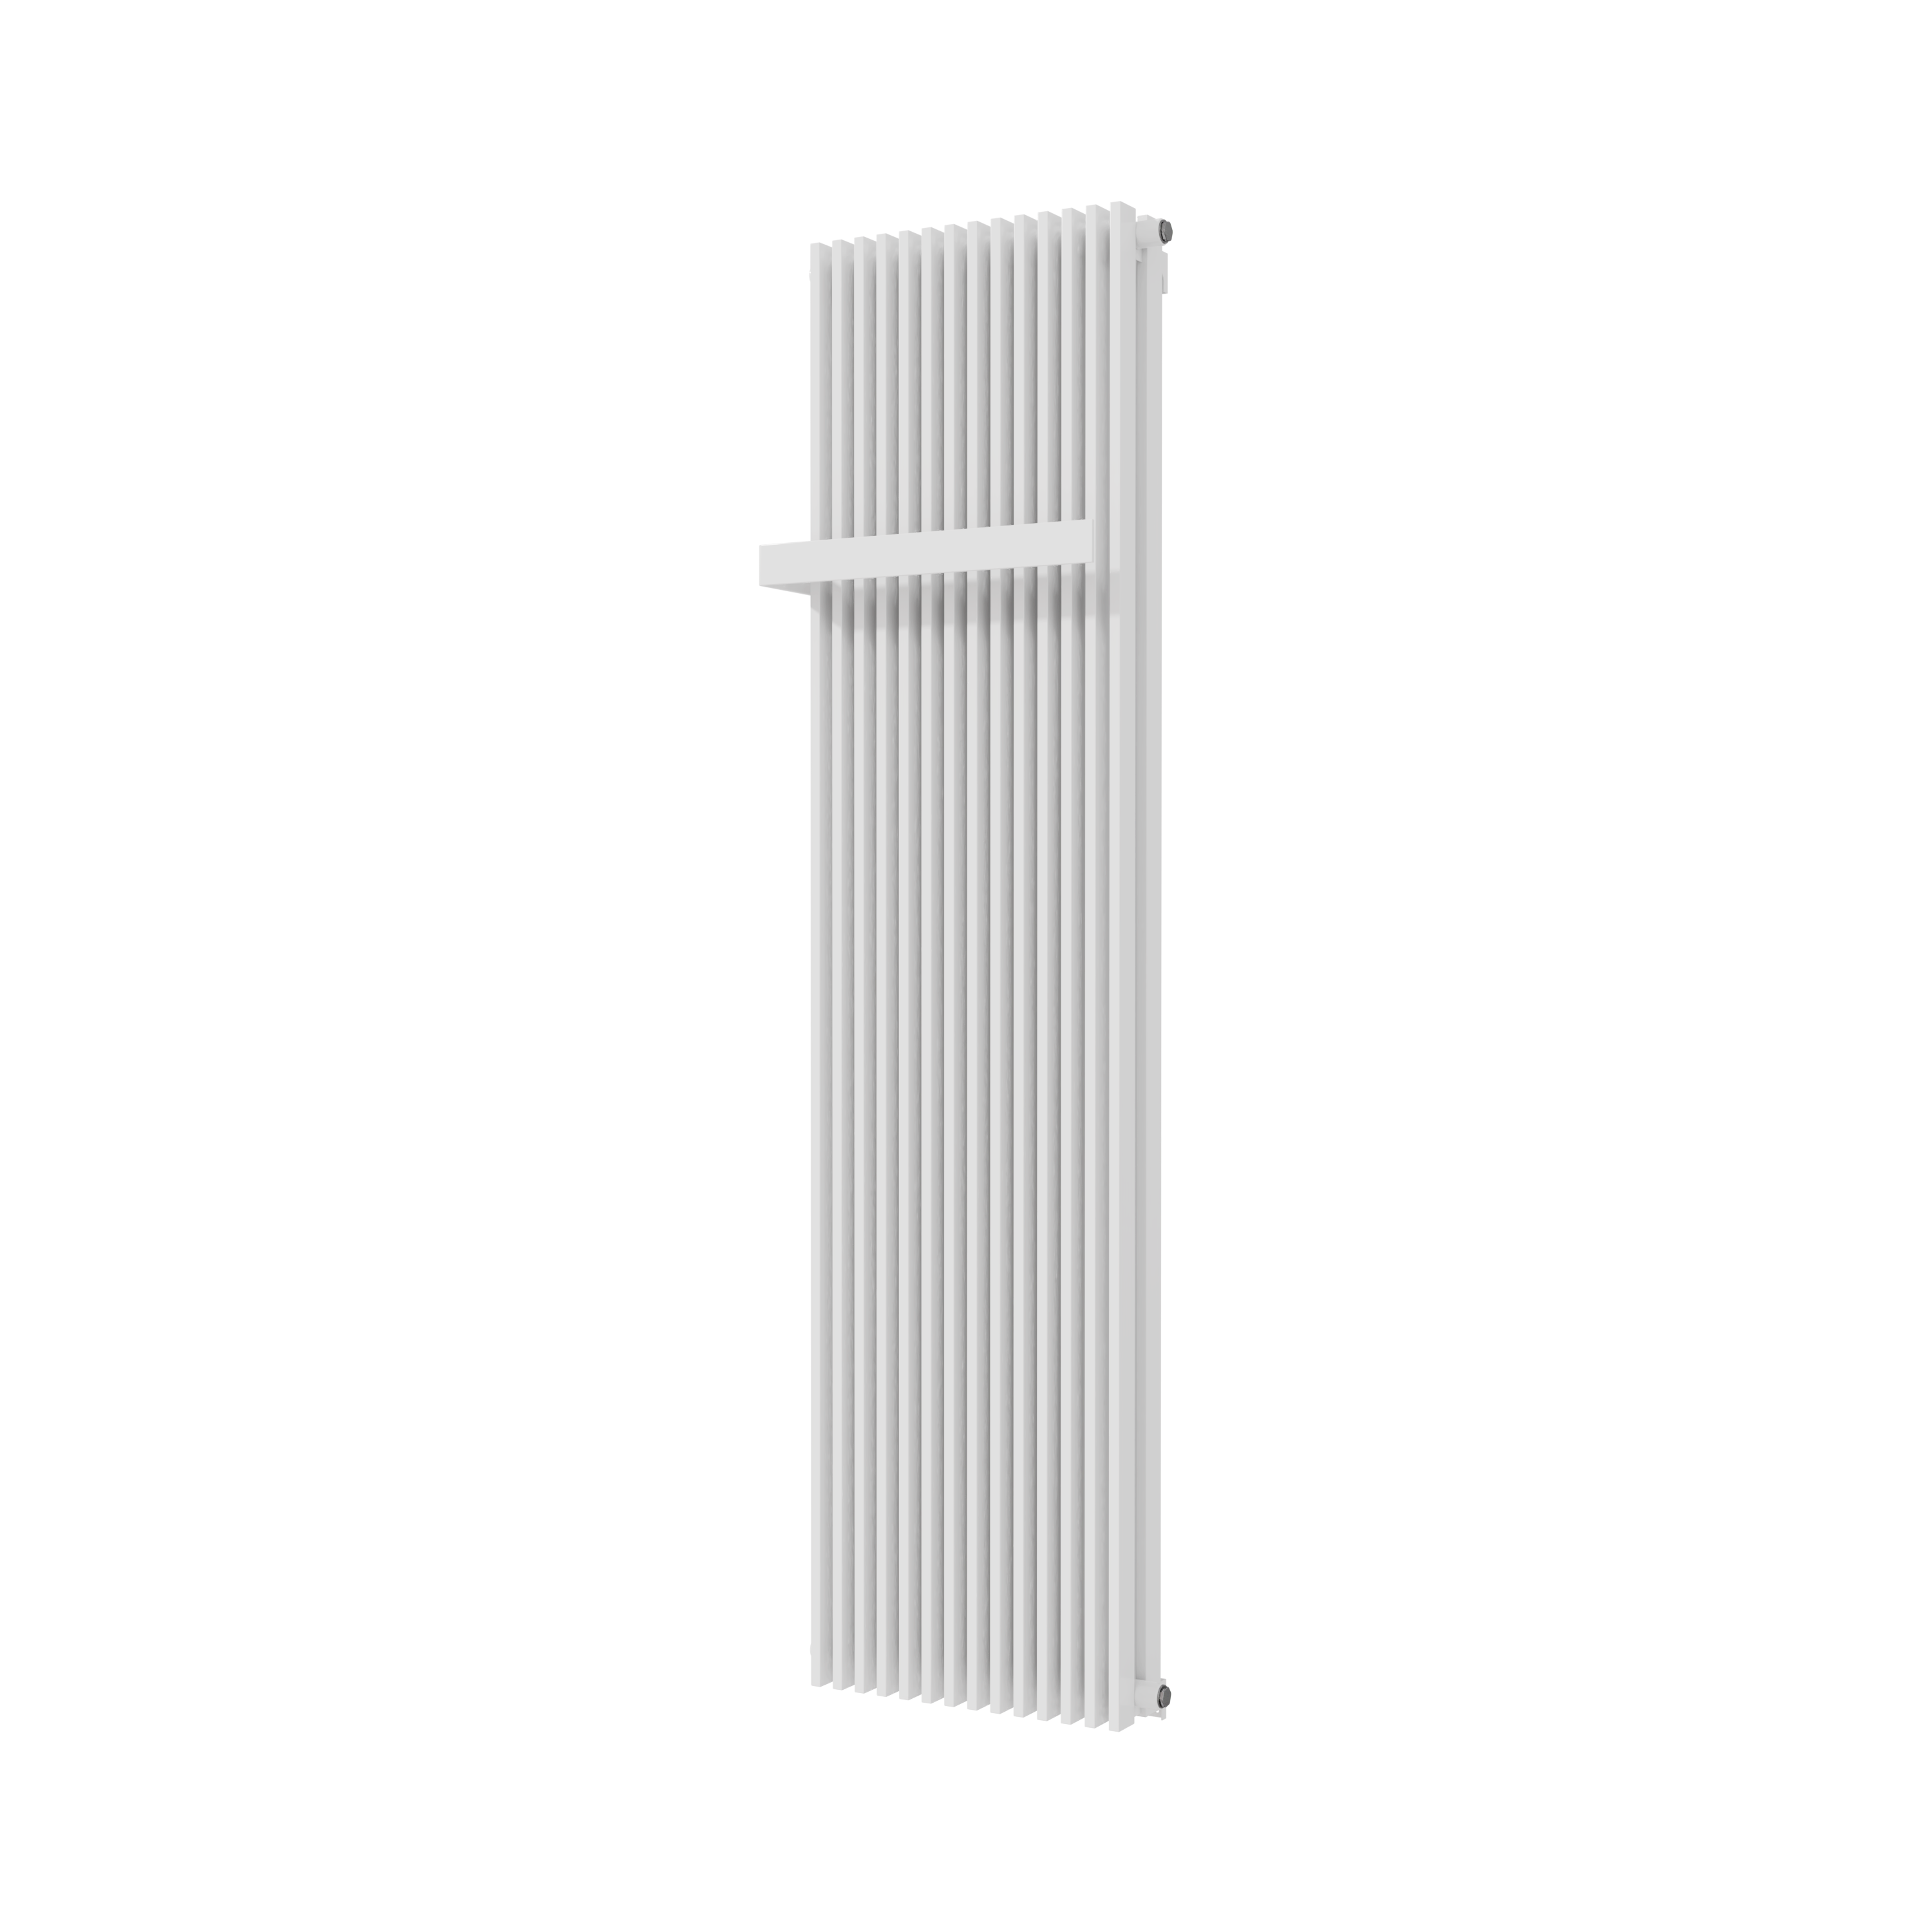 Vipera Corrason dubbele badkamerradiator 50 x 180 cm centrale verwarming hoogglans wit zij- en middenaansluiting 2,857W